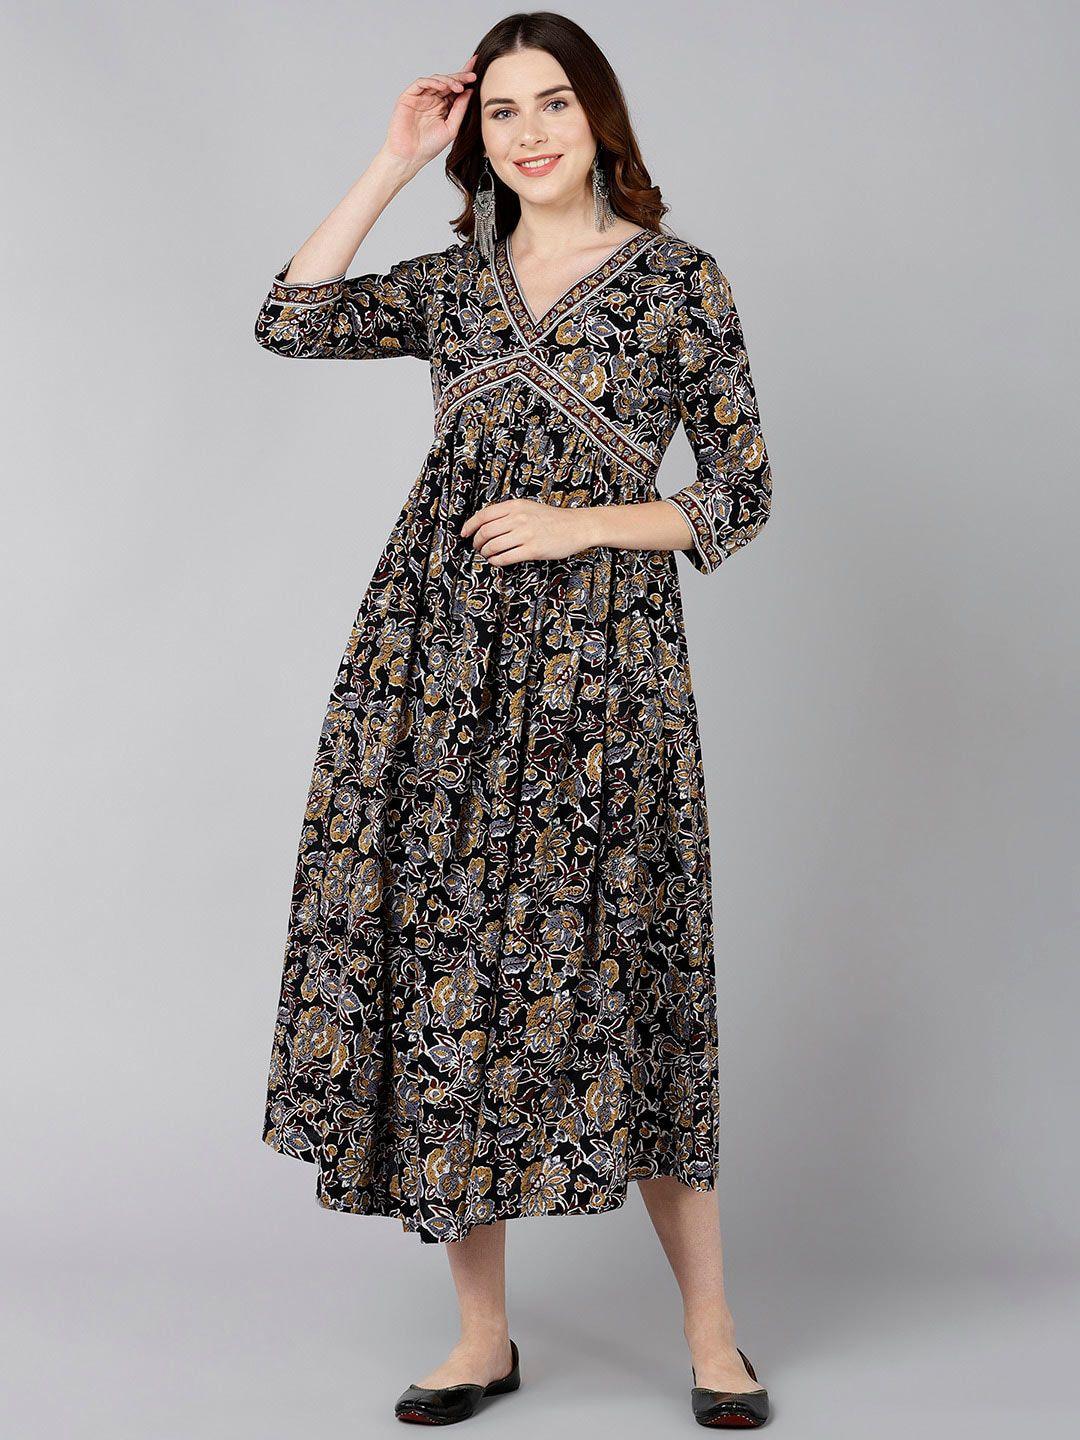 znx clothing women brown floral printed midi dress